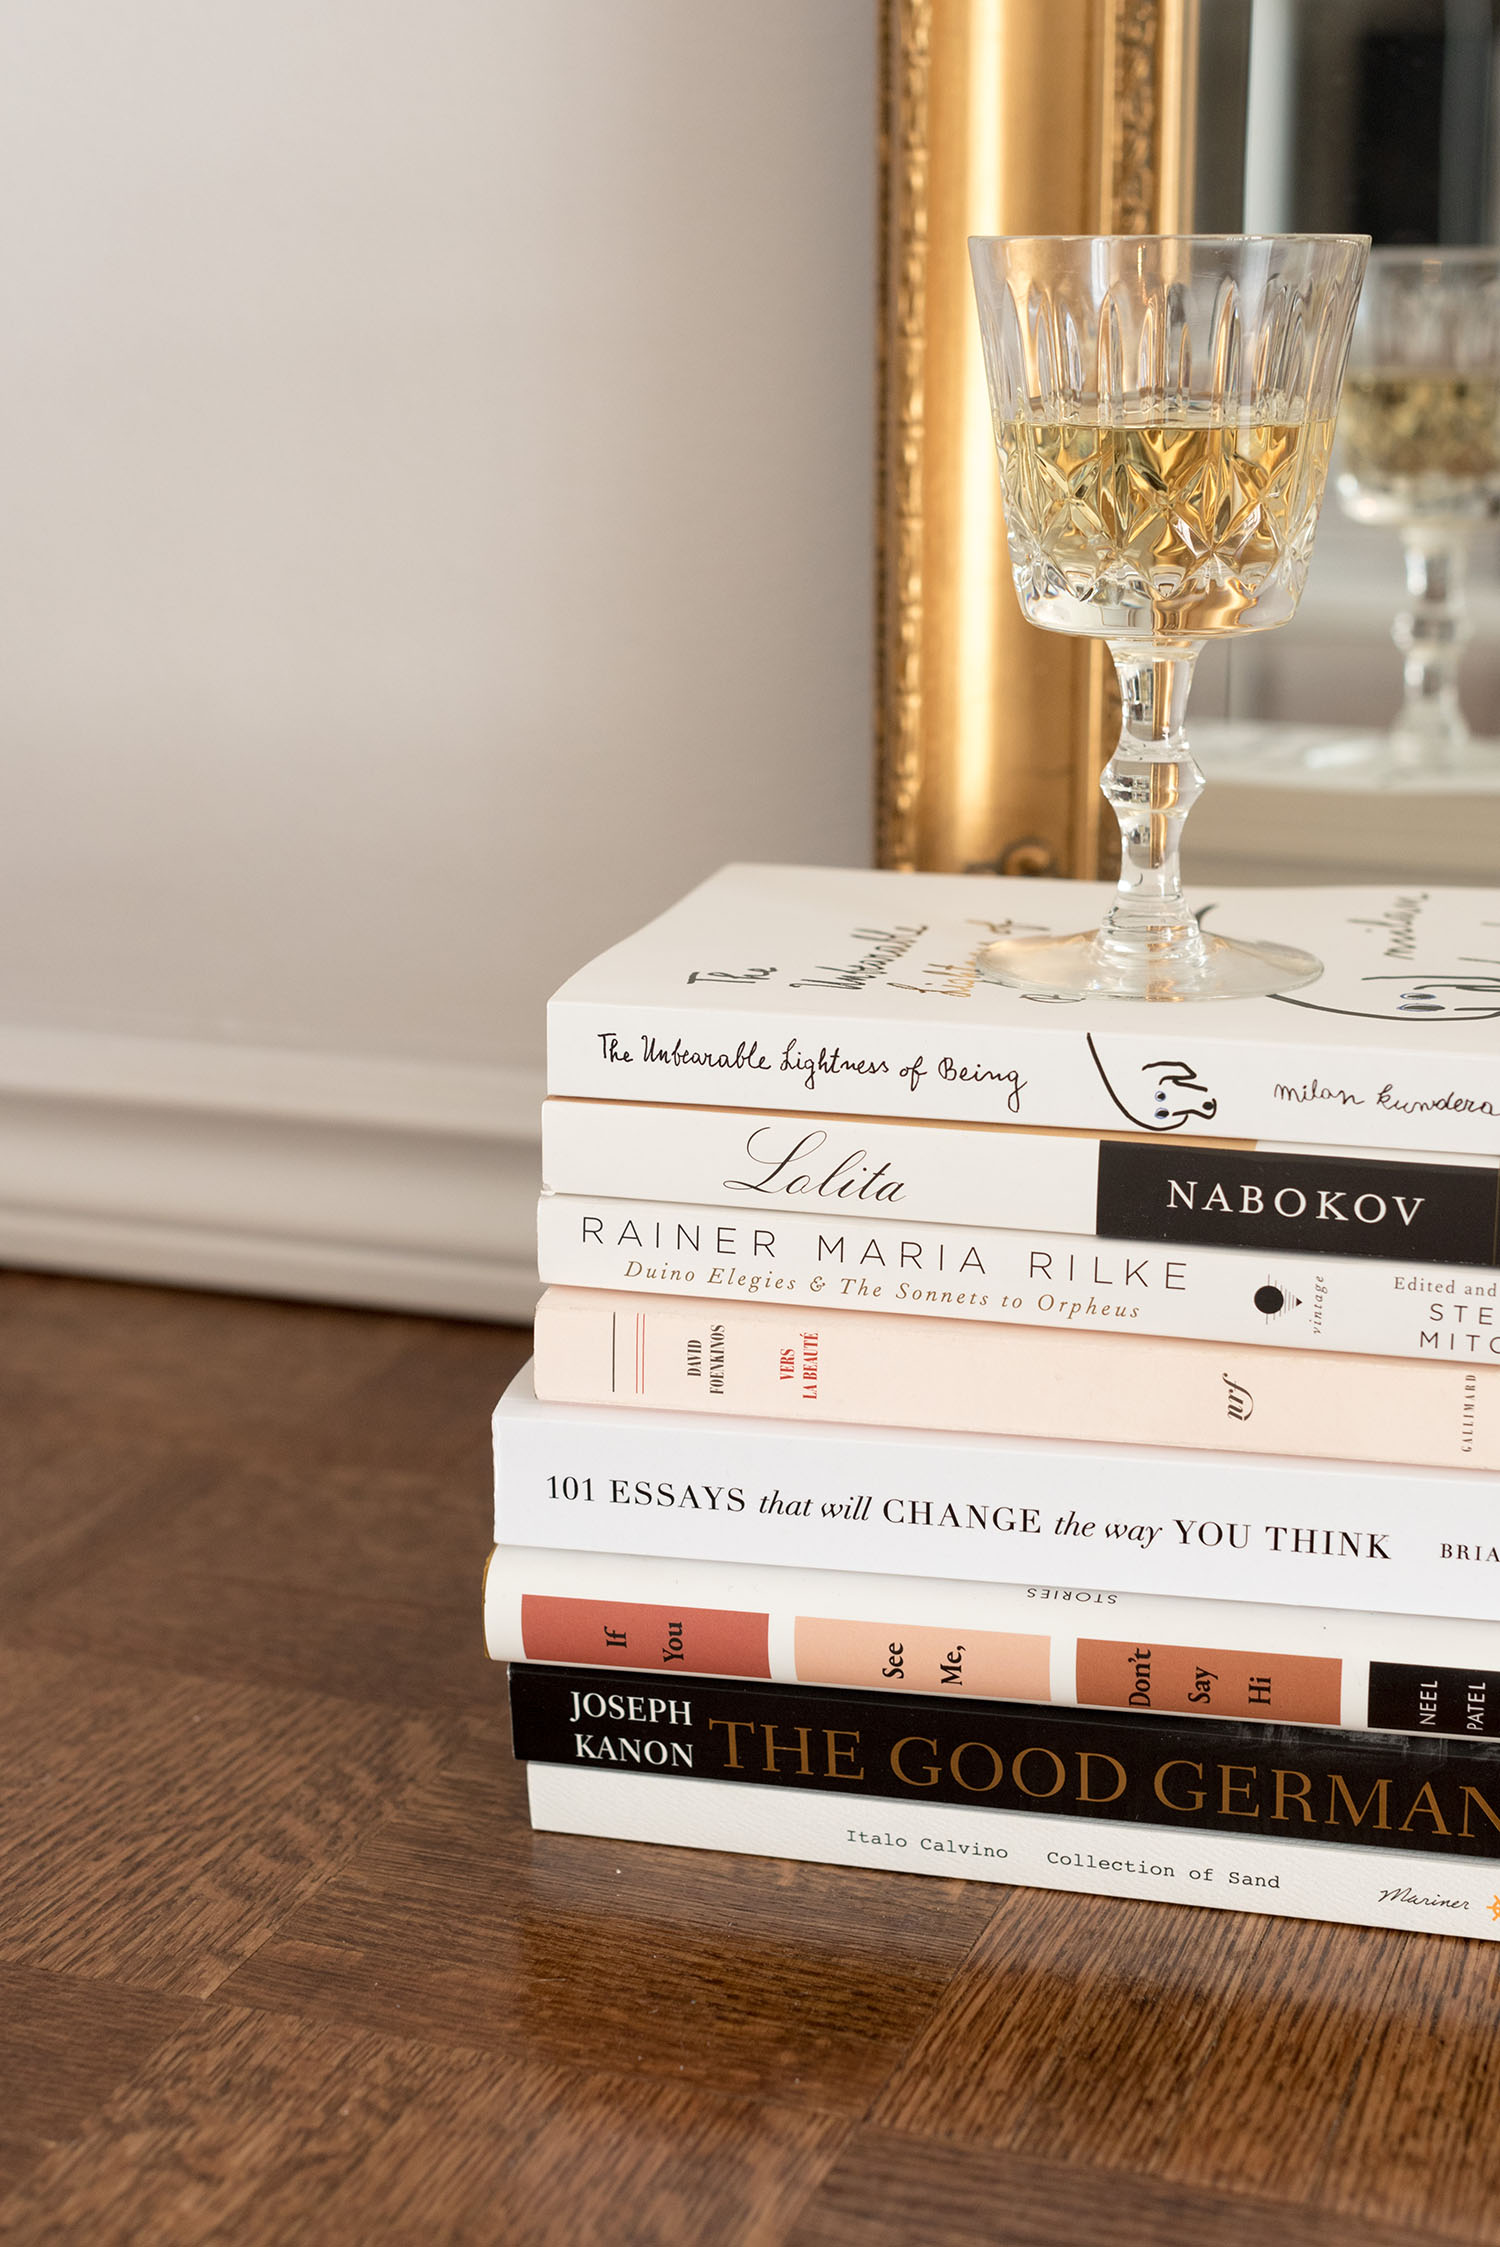 Coco & Vera - A book stack and a glass of white wine